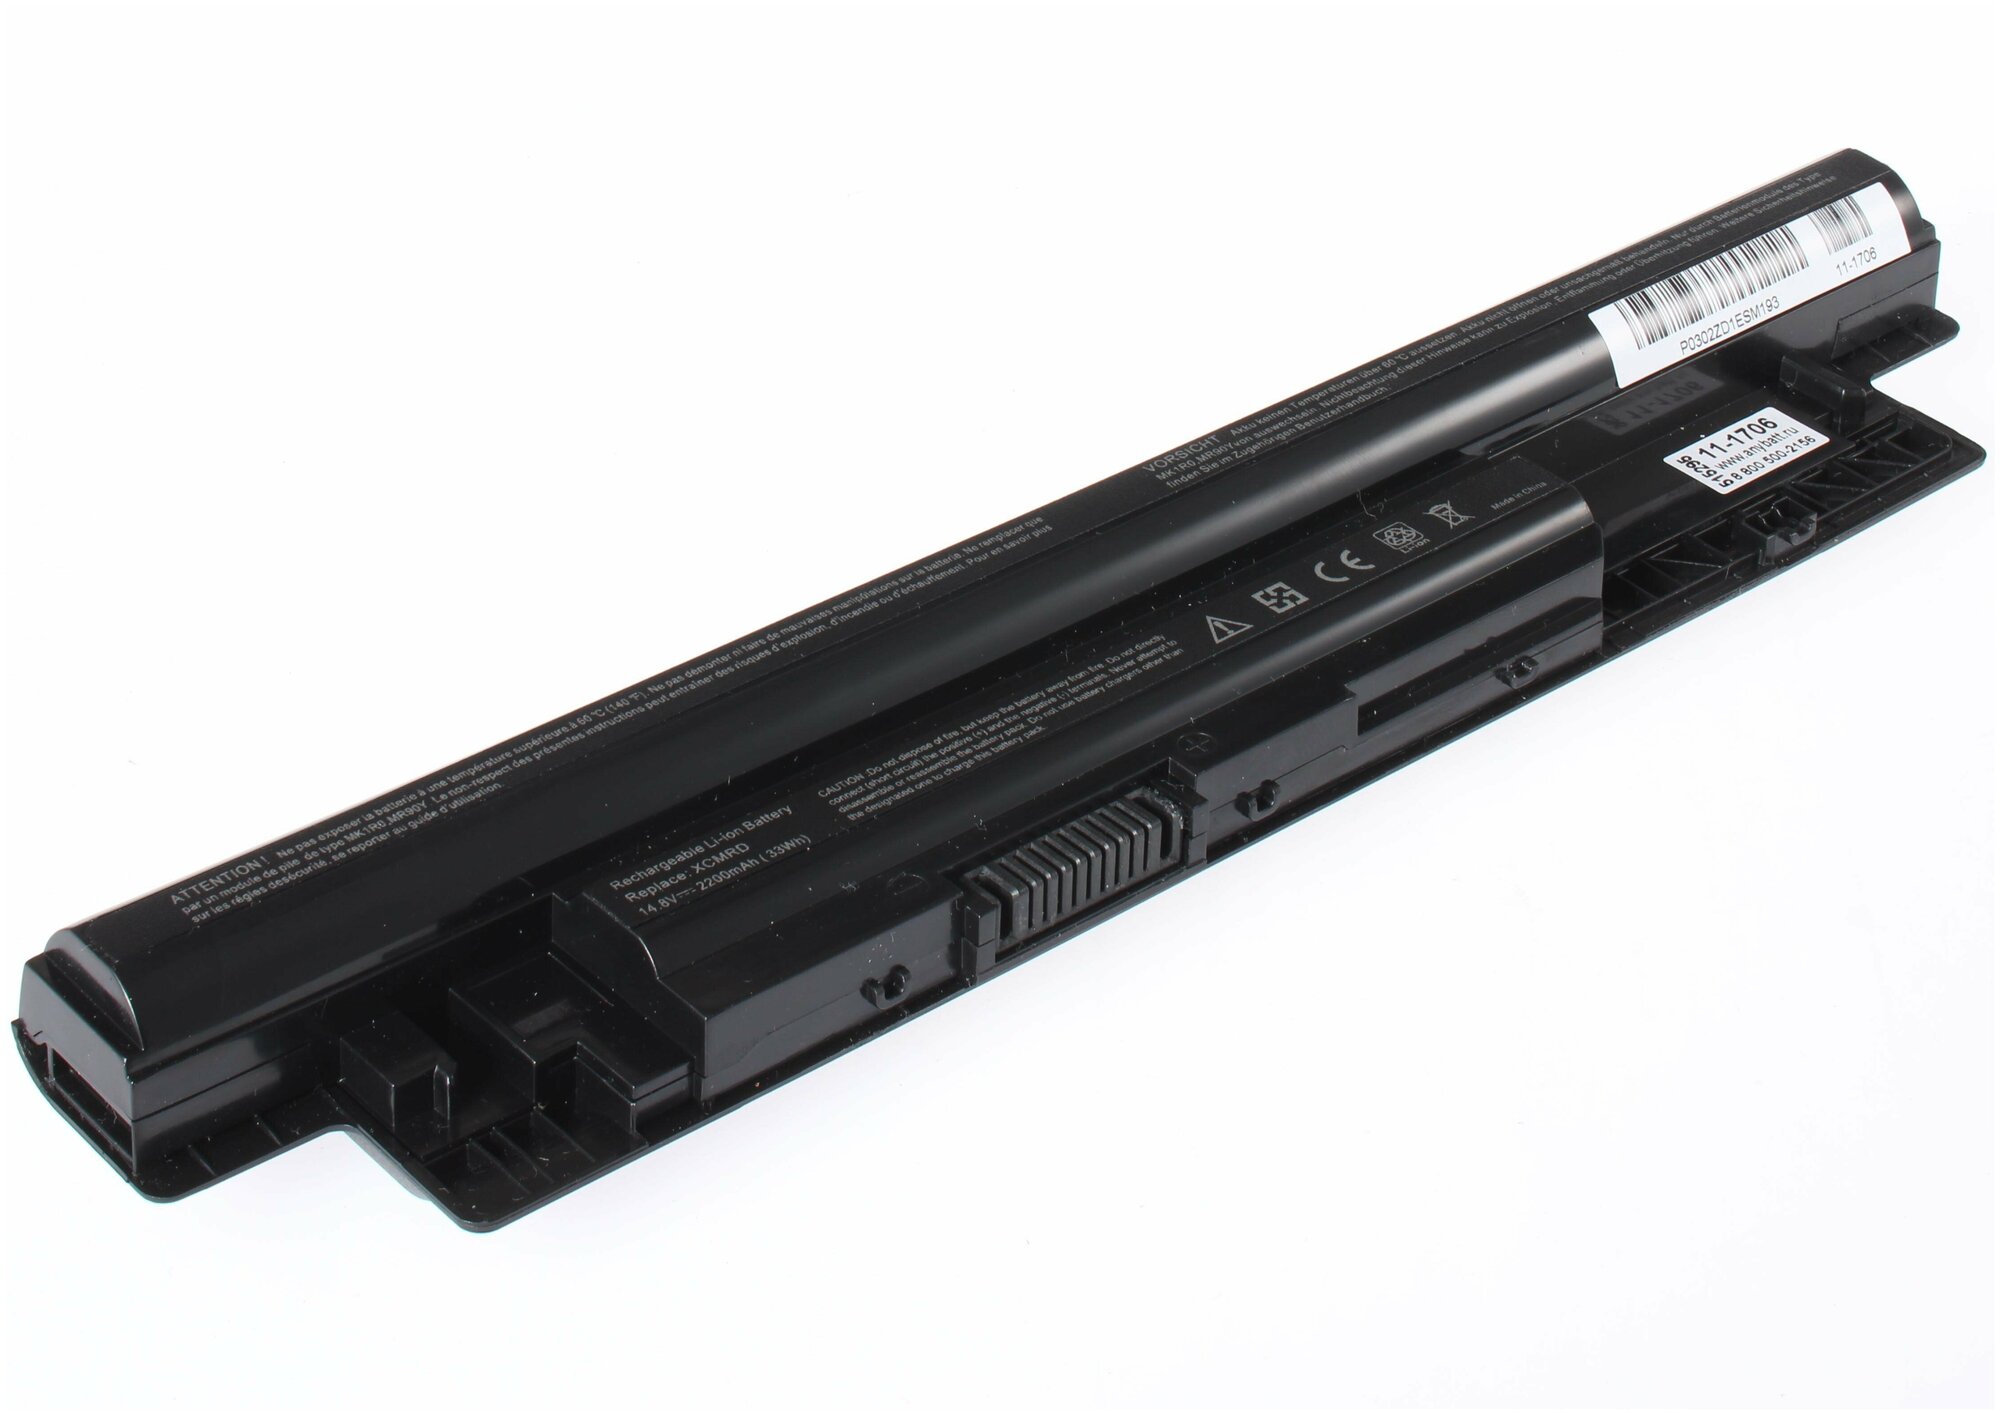 Аккумуляторная батарея Anybatt 11-B1-1706 2200mAh для ноутбуков MR90Y XCMRD 6HY59